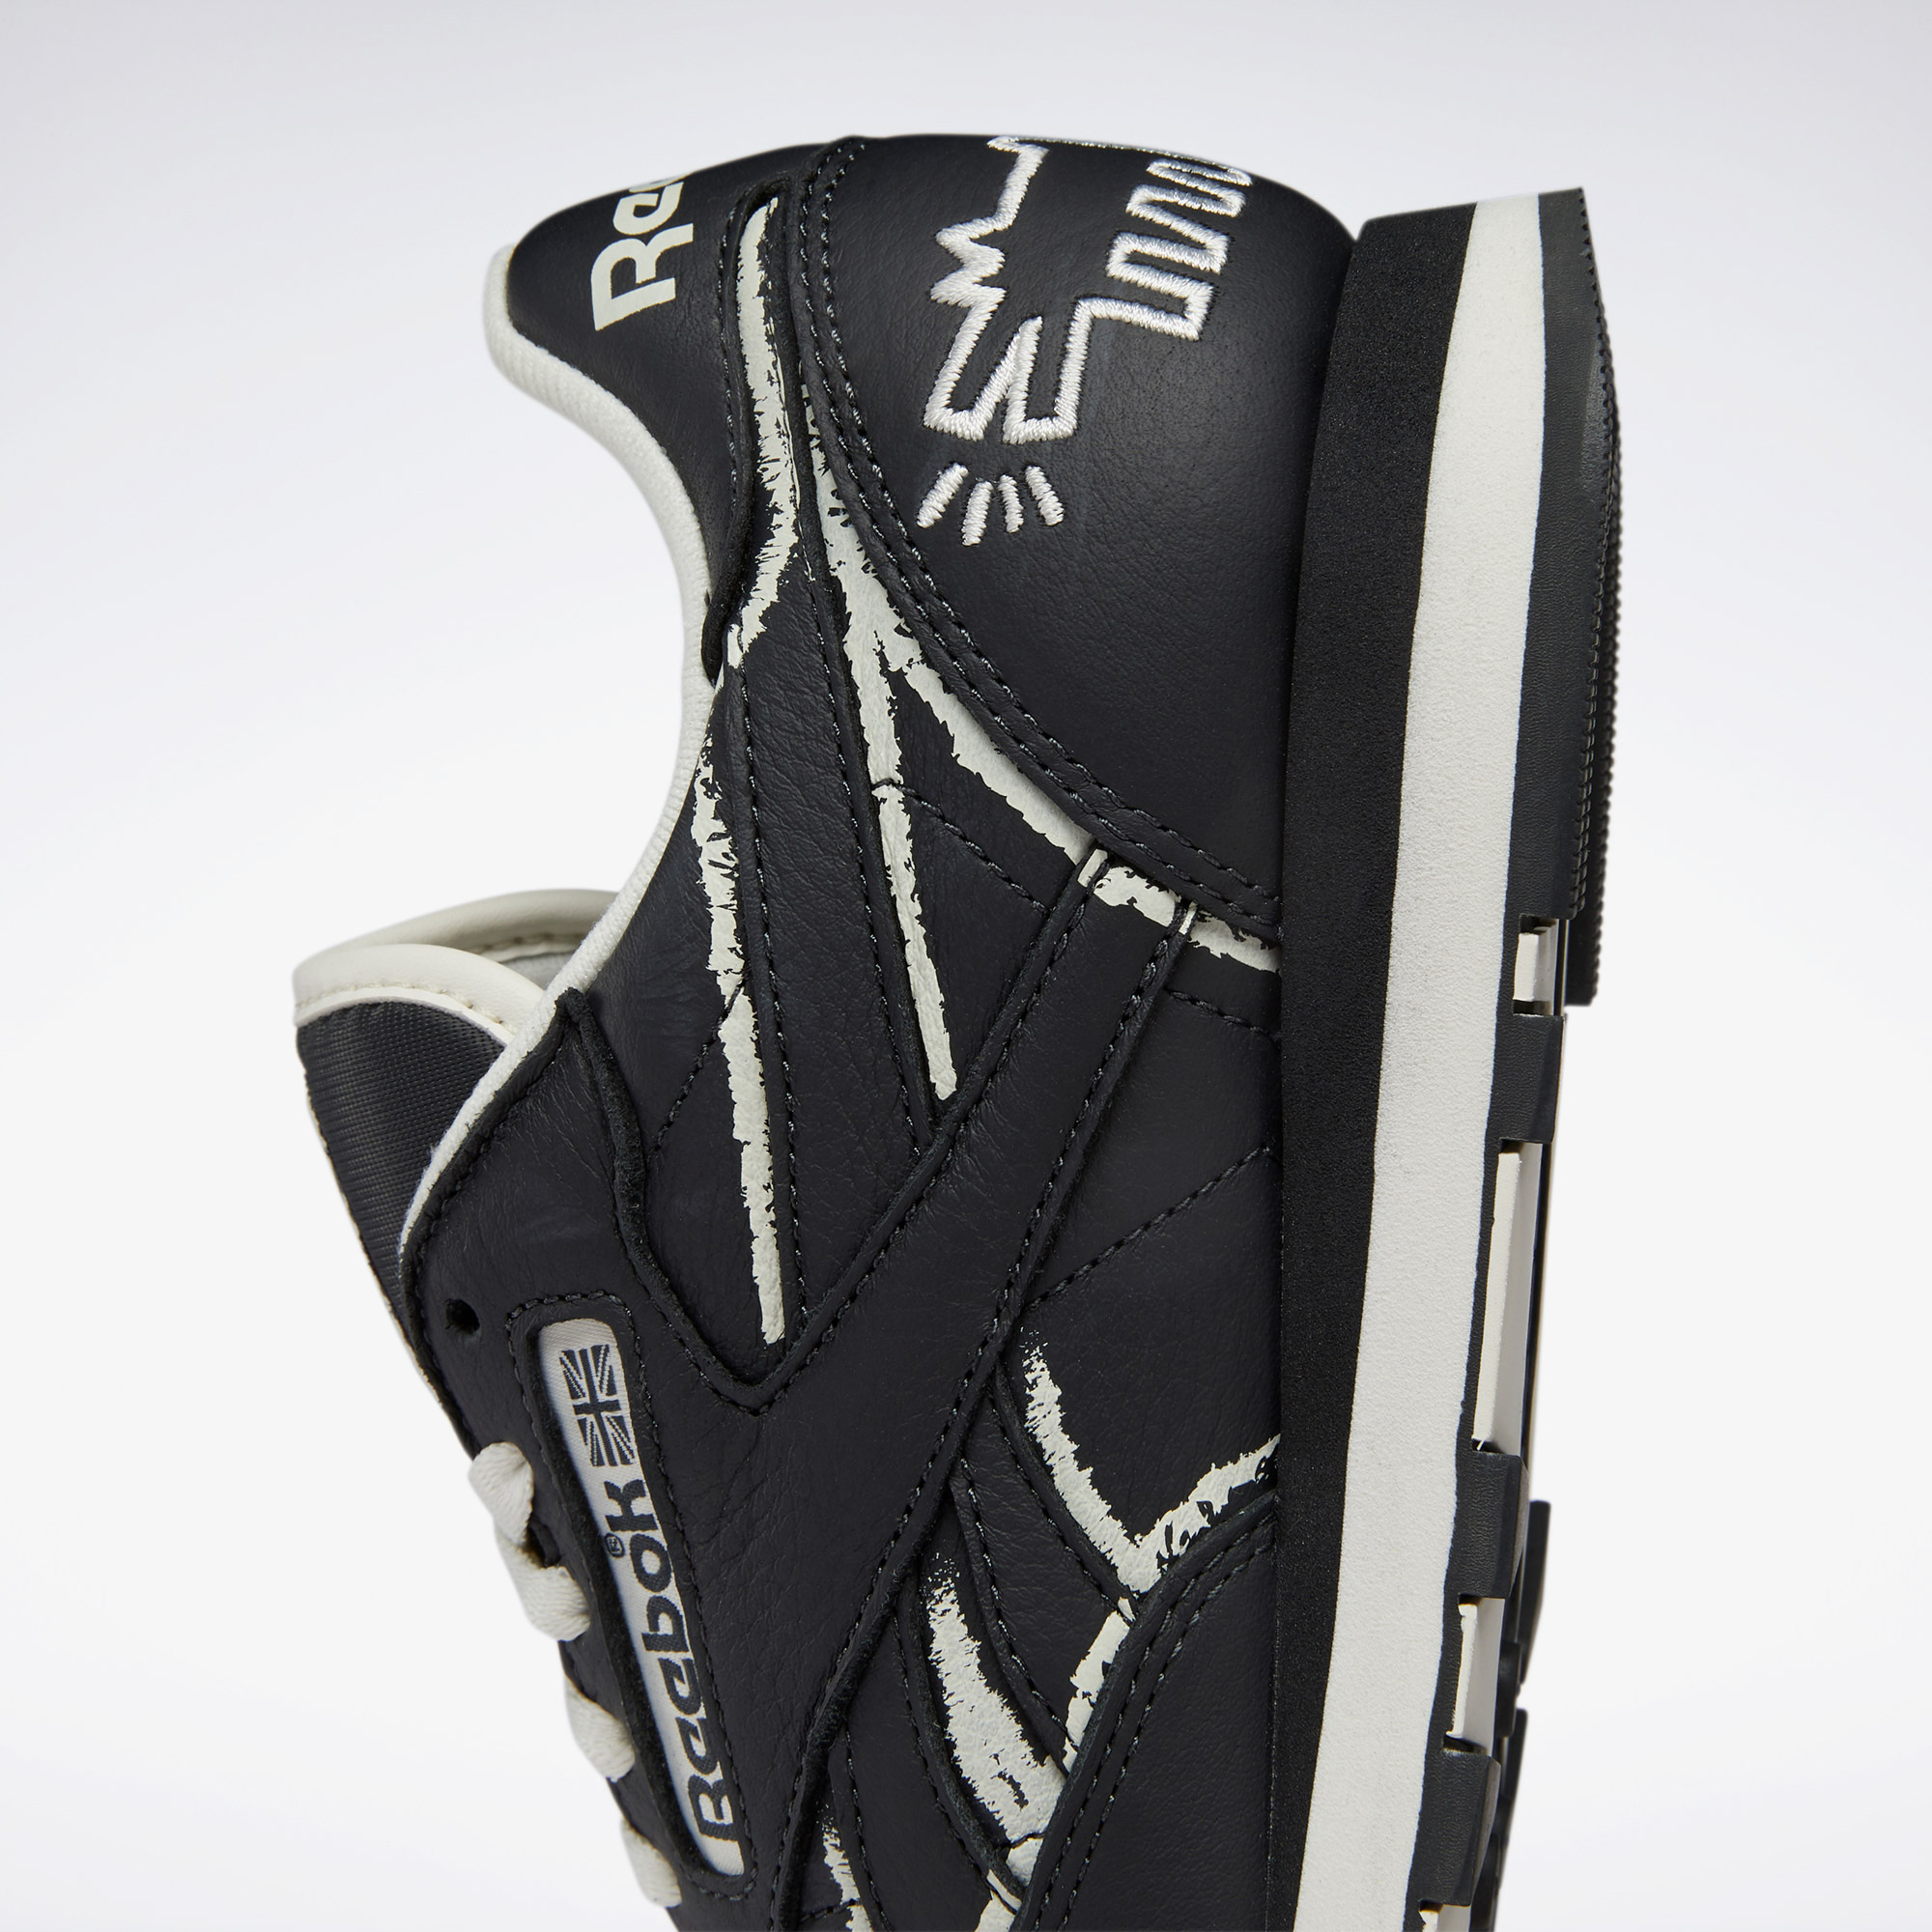 Reebok Classic Leather Keith Haring Erkek Siyah Spor Ayakkabı